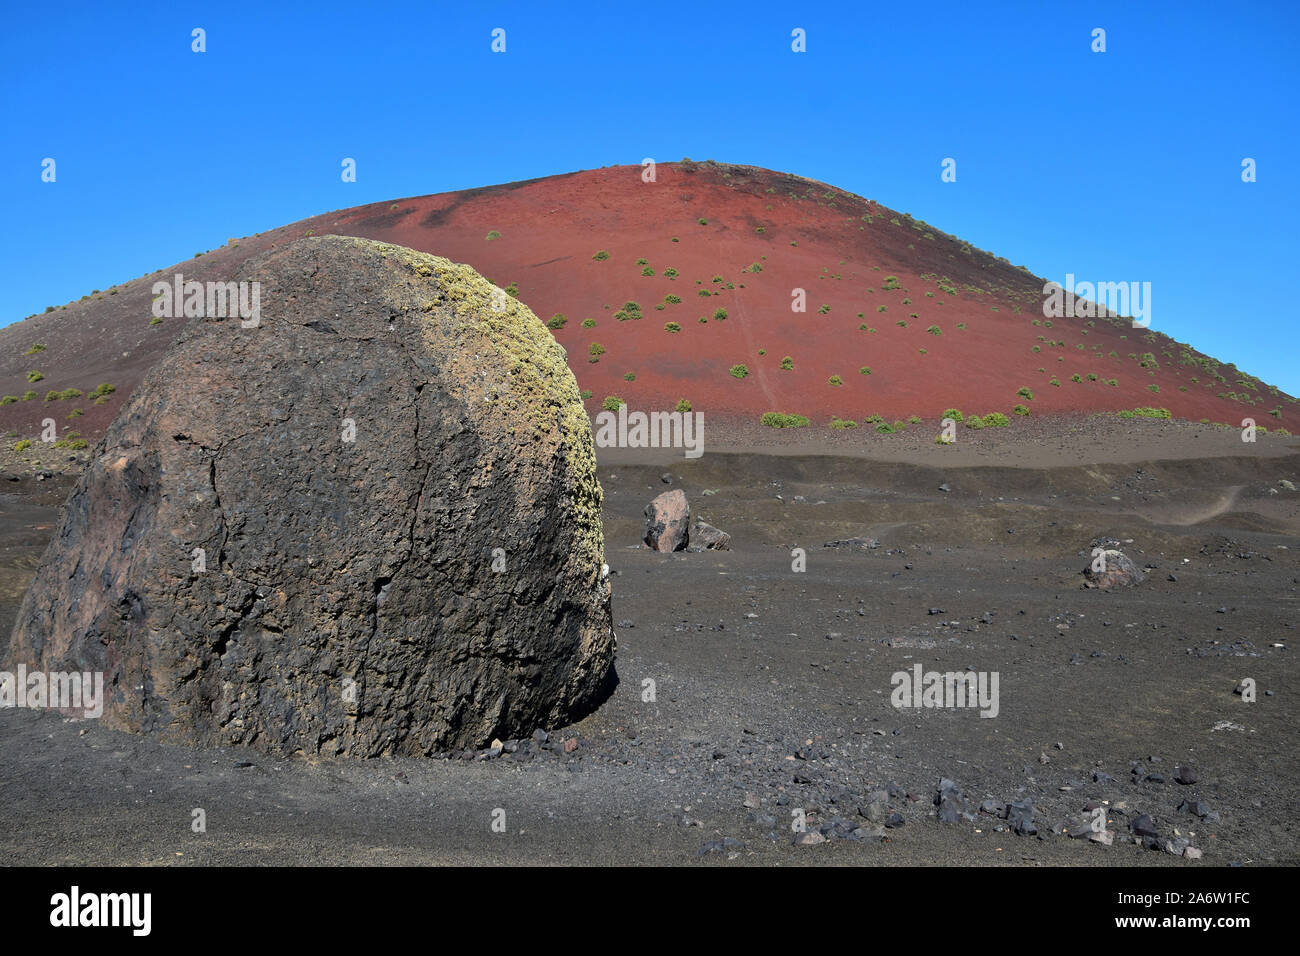 The big lava bomb near the red volcano Montana Colorada in Lanzarote, Spain. Stock Photo